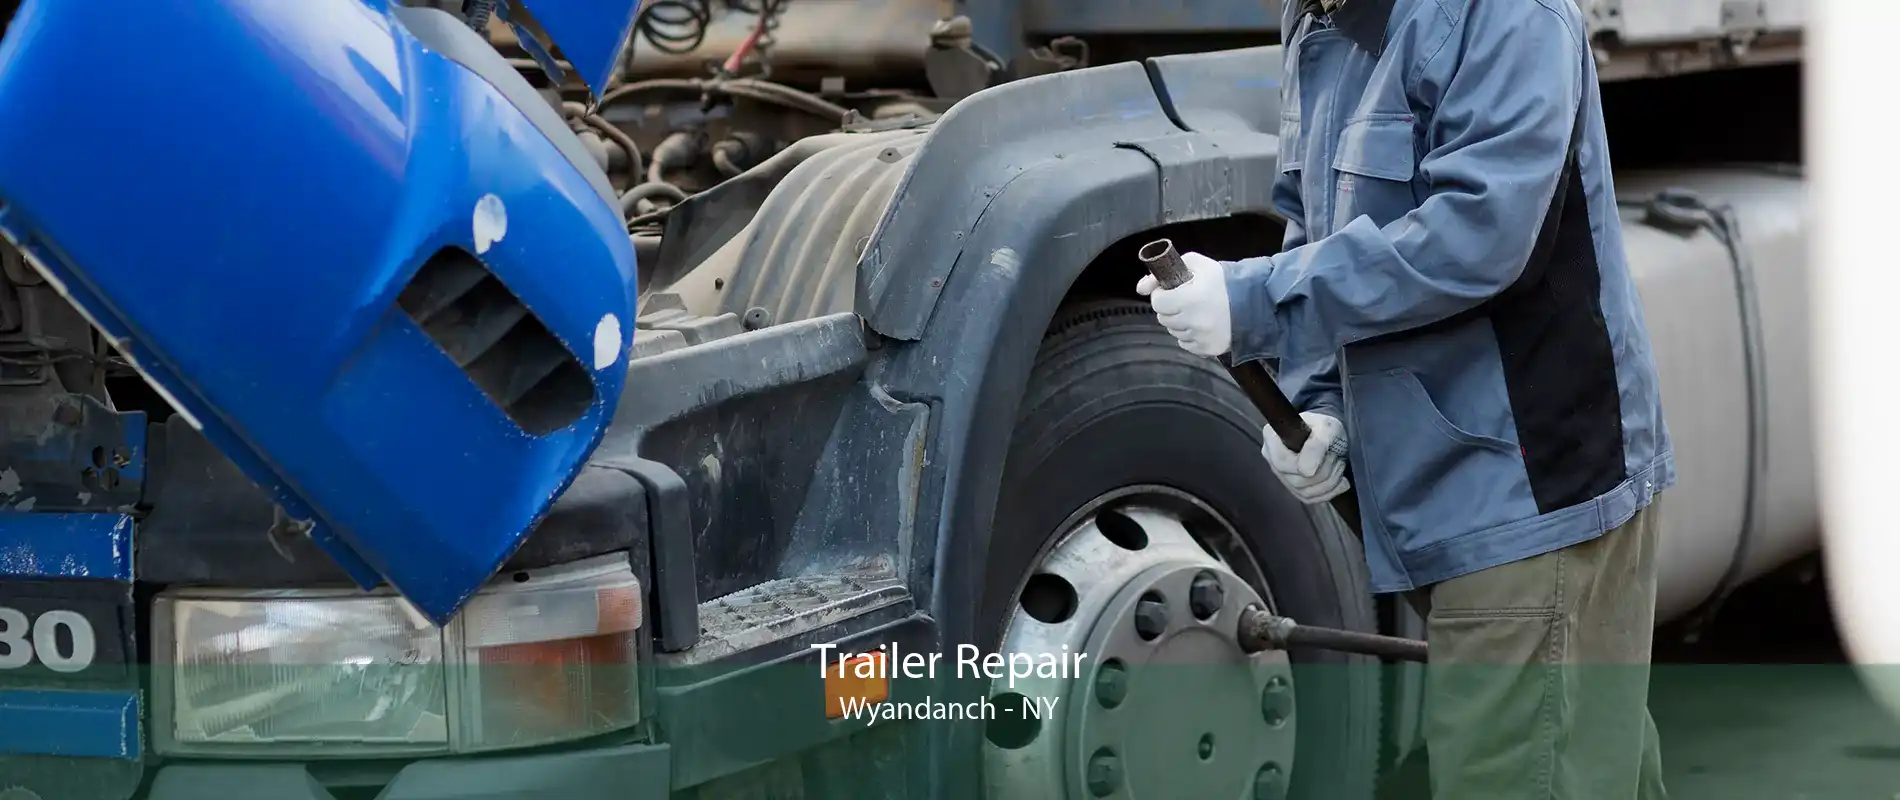 Trailer Repair Wyandanch - NY